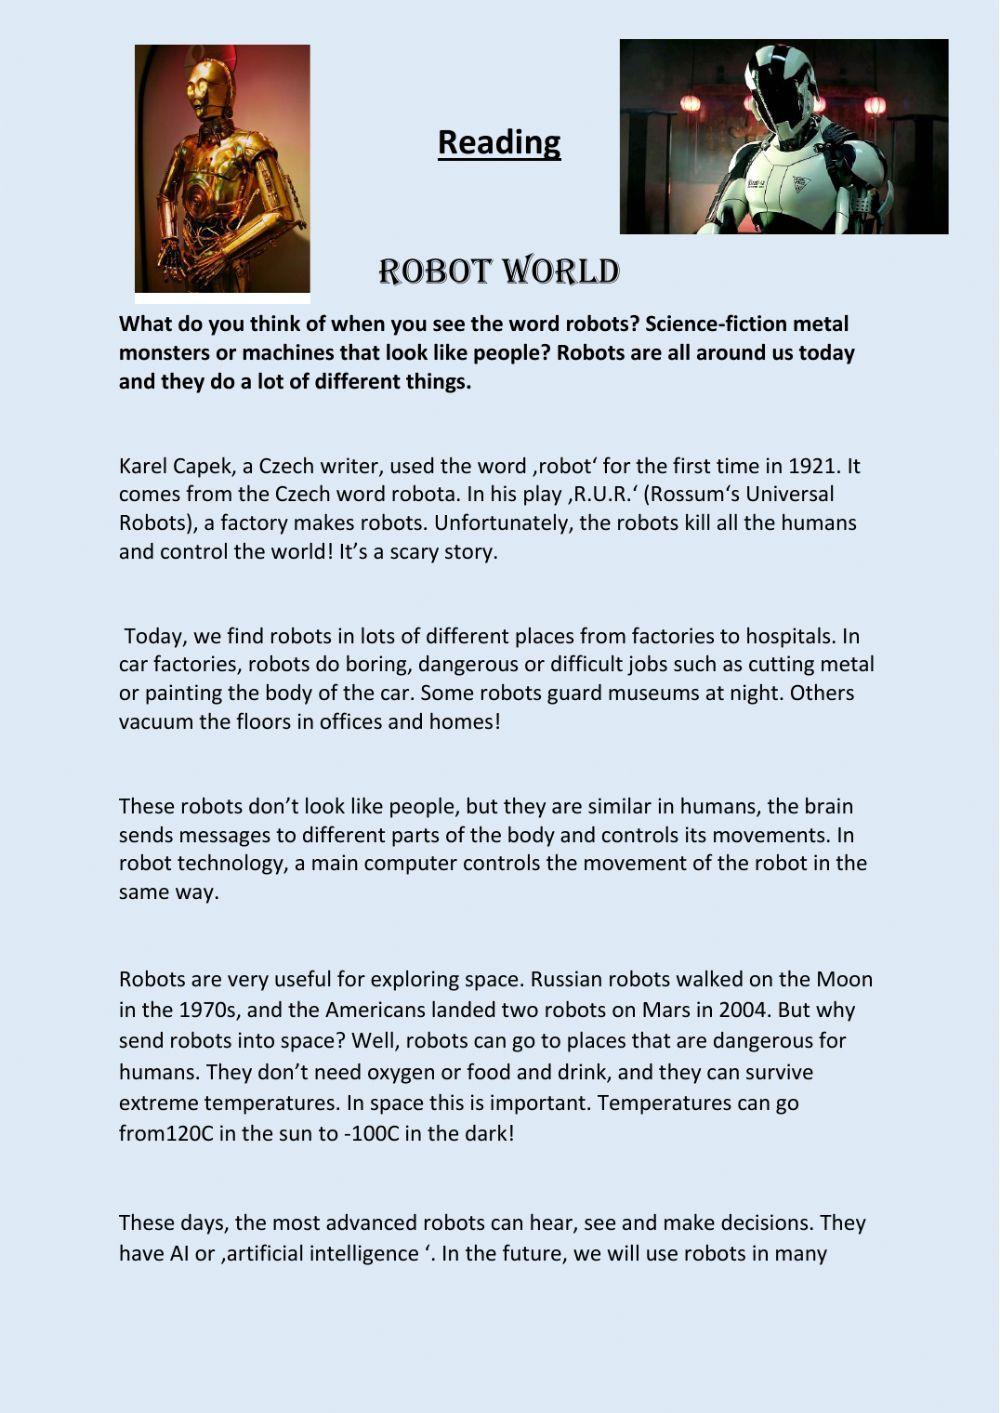 Reading - Robot world